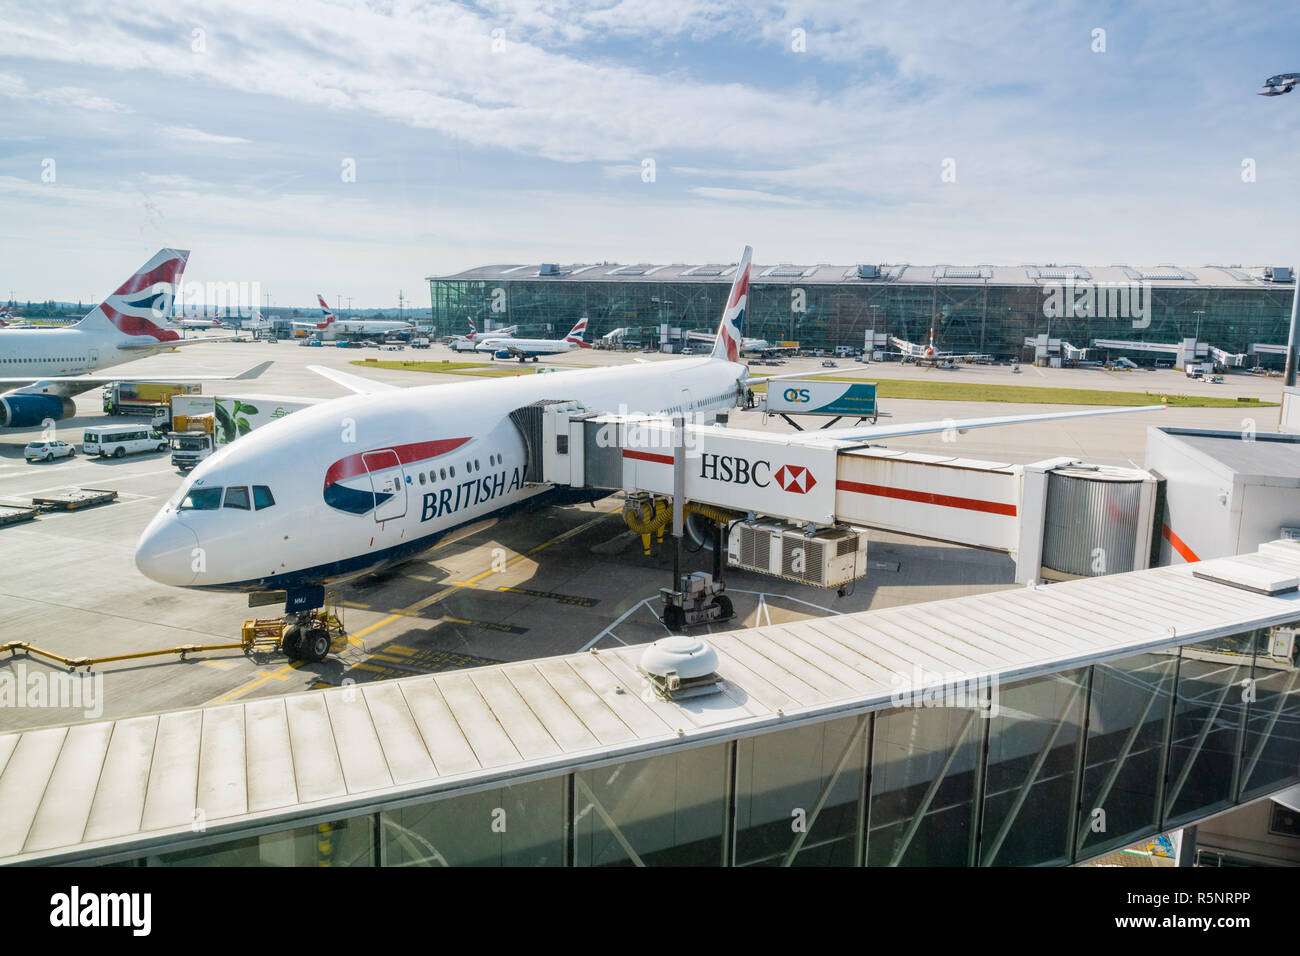 September 24, 2017 London/UK - British Airways aircraft docked at ...